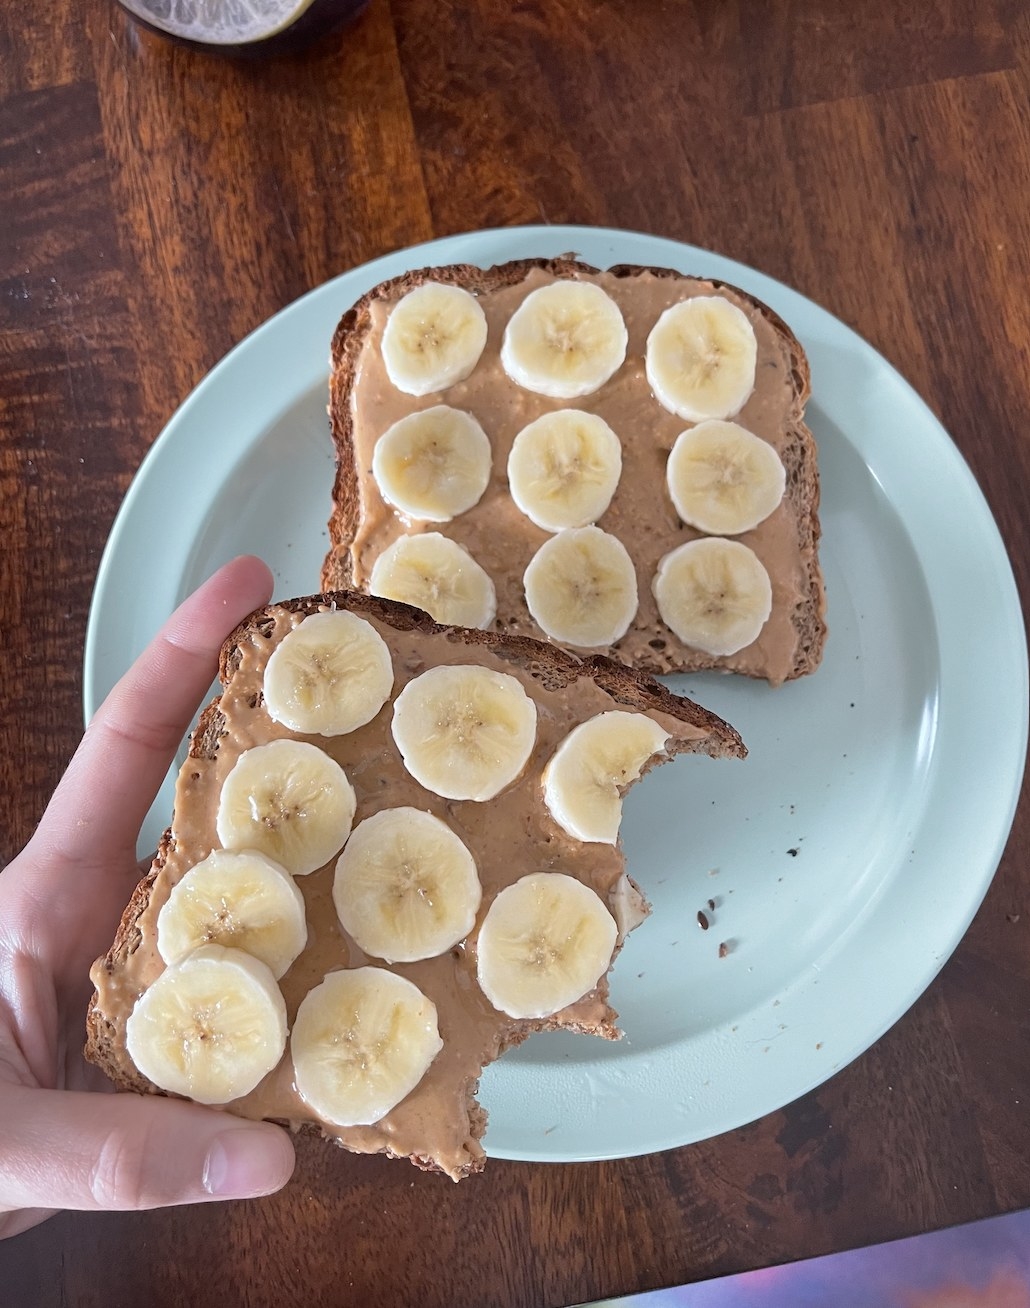 Peanut butter and banana toast